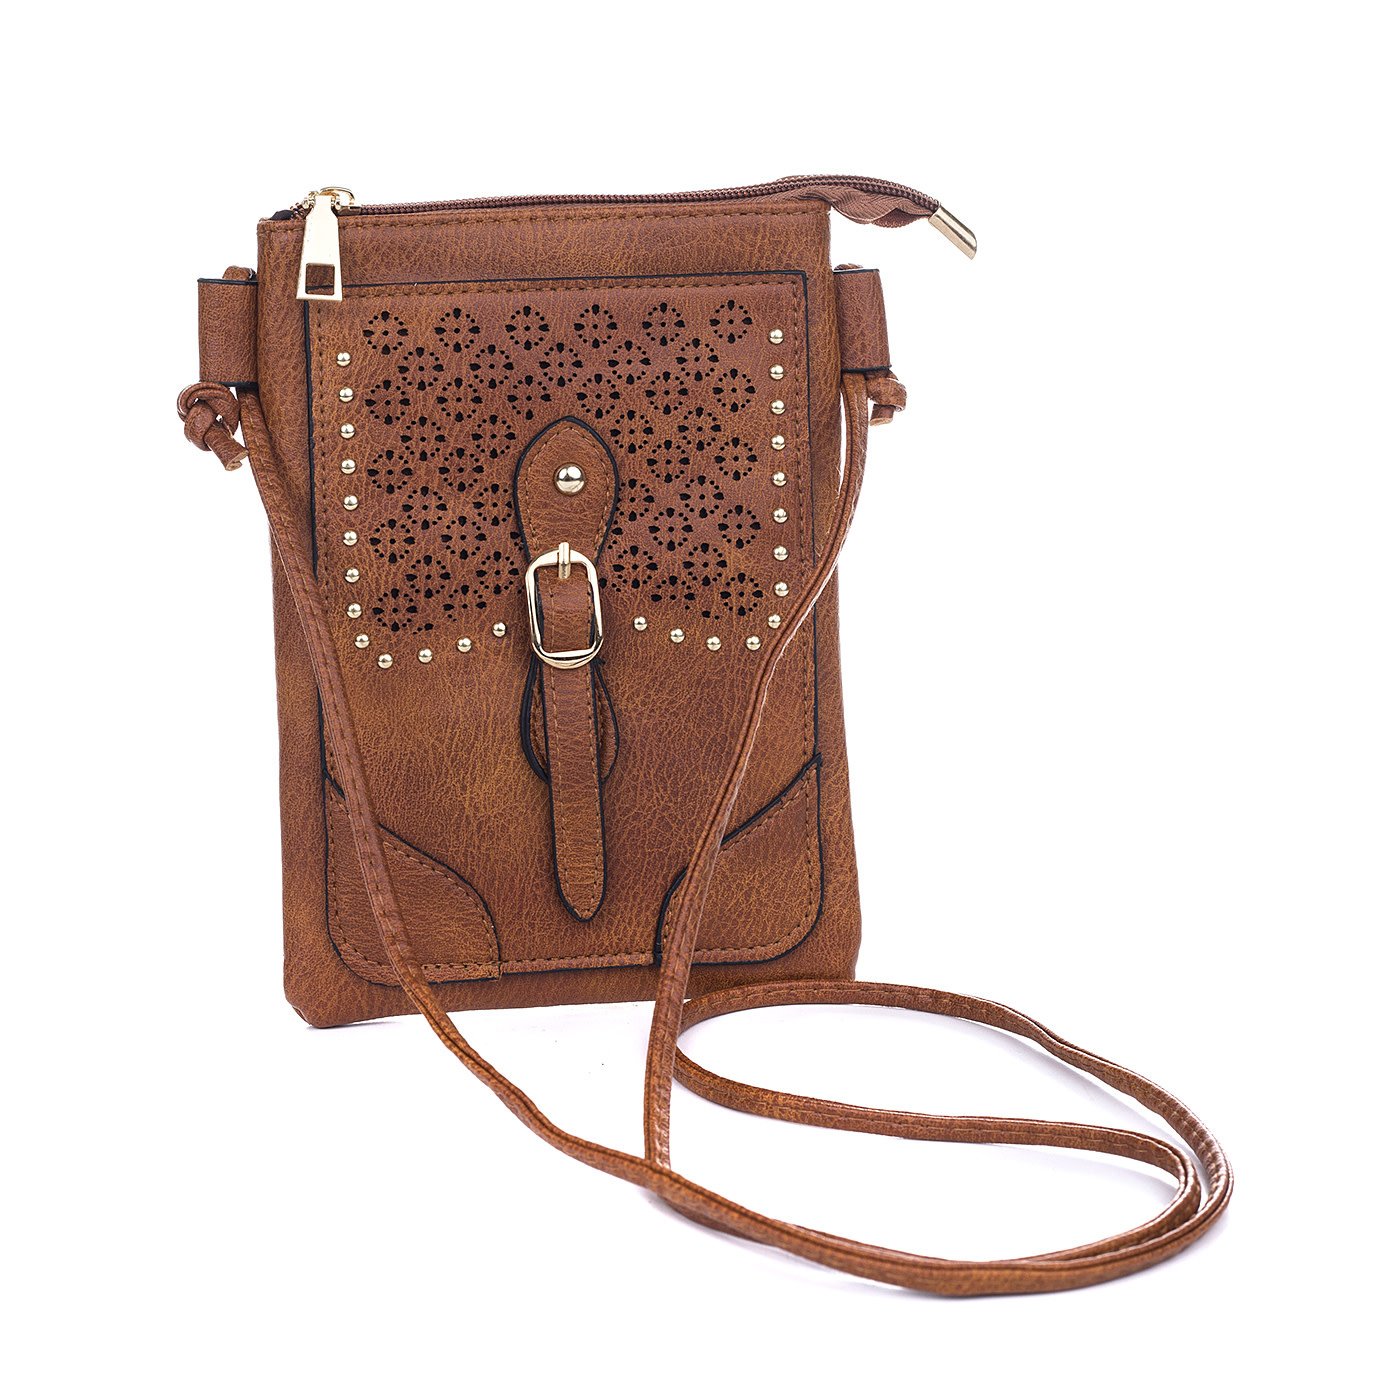 Ivys Clothing & Fashion Accessories Caramel Crossover Handbag